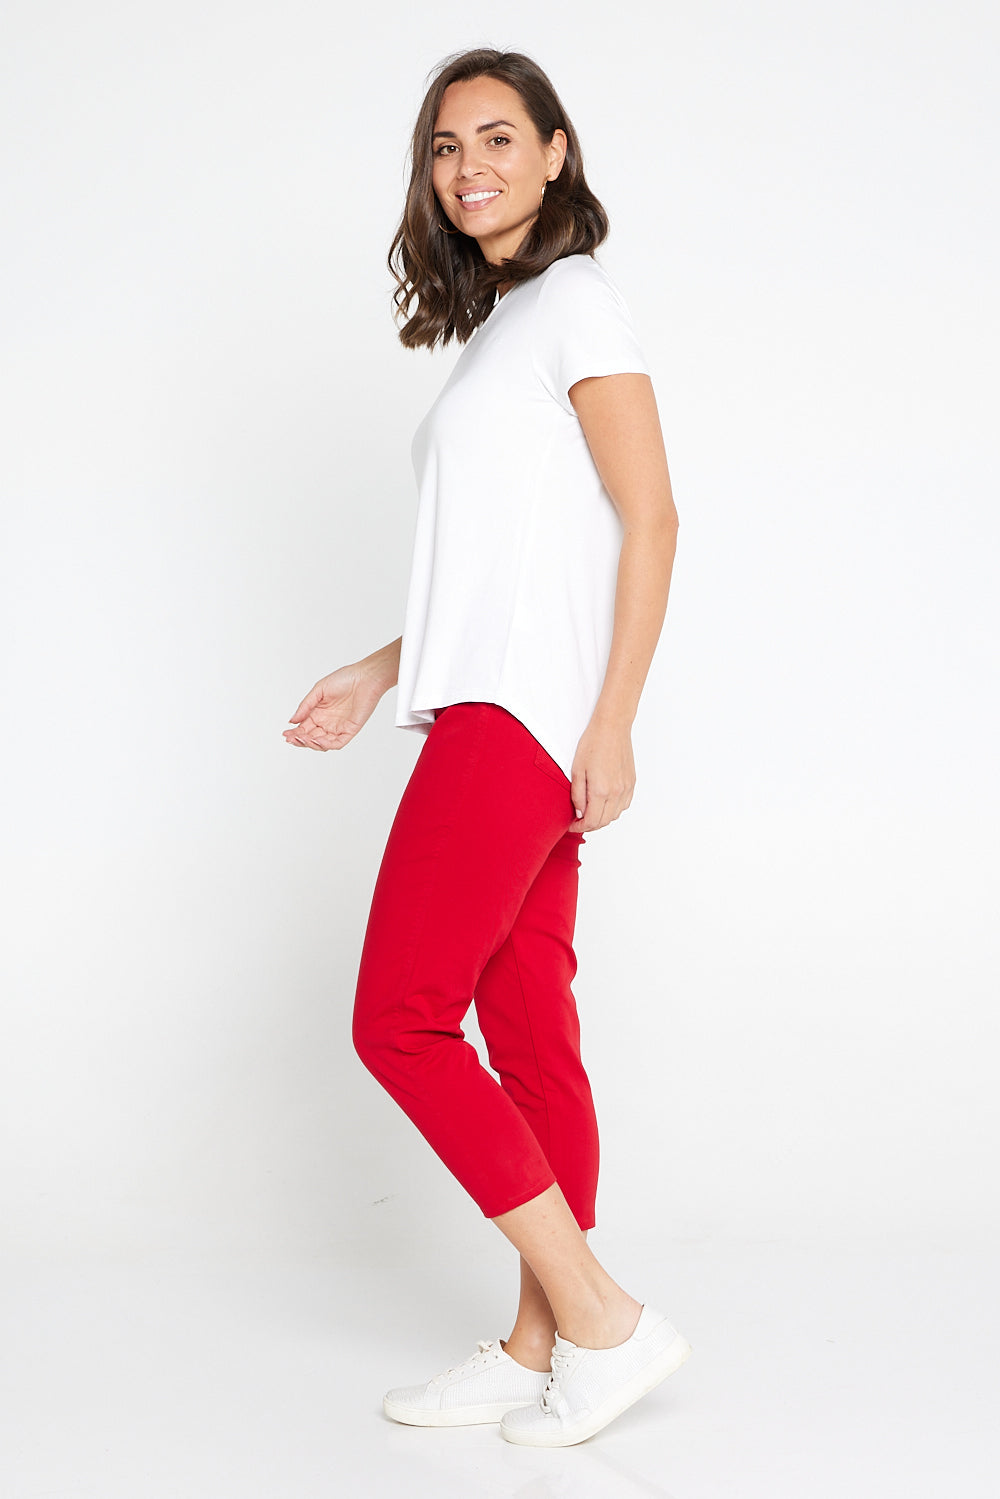 Stefani Capri Pants - Red  Cafe Latte Stretch Cotton Capri Jegging – TULIO  Fashion